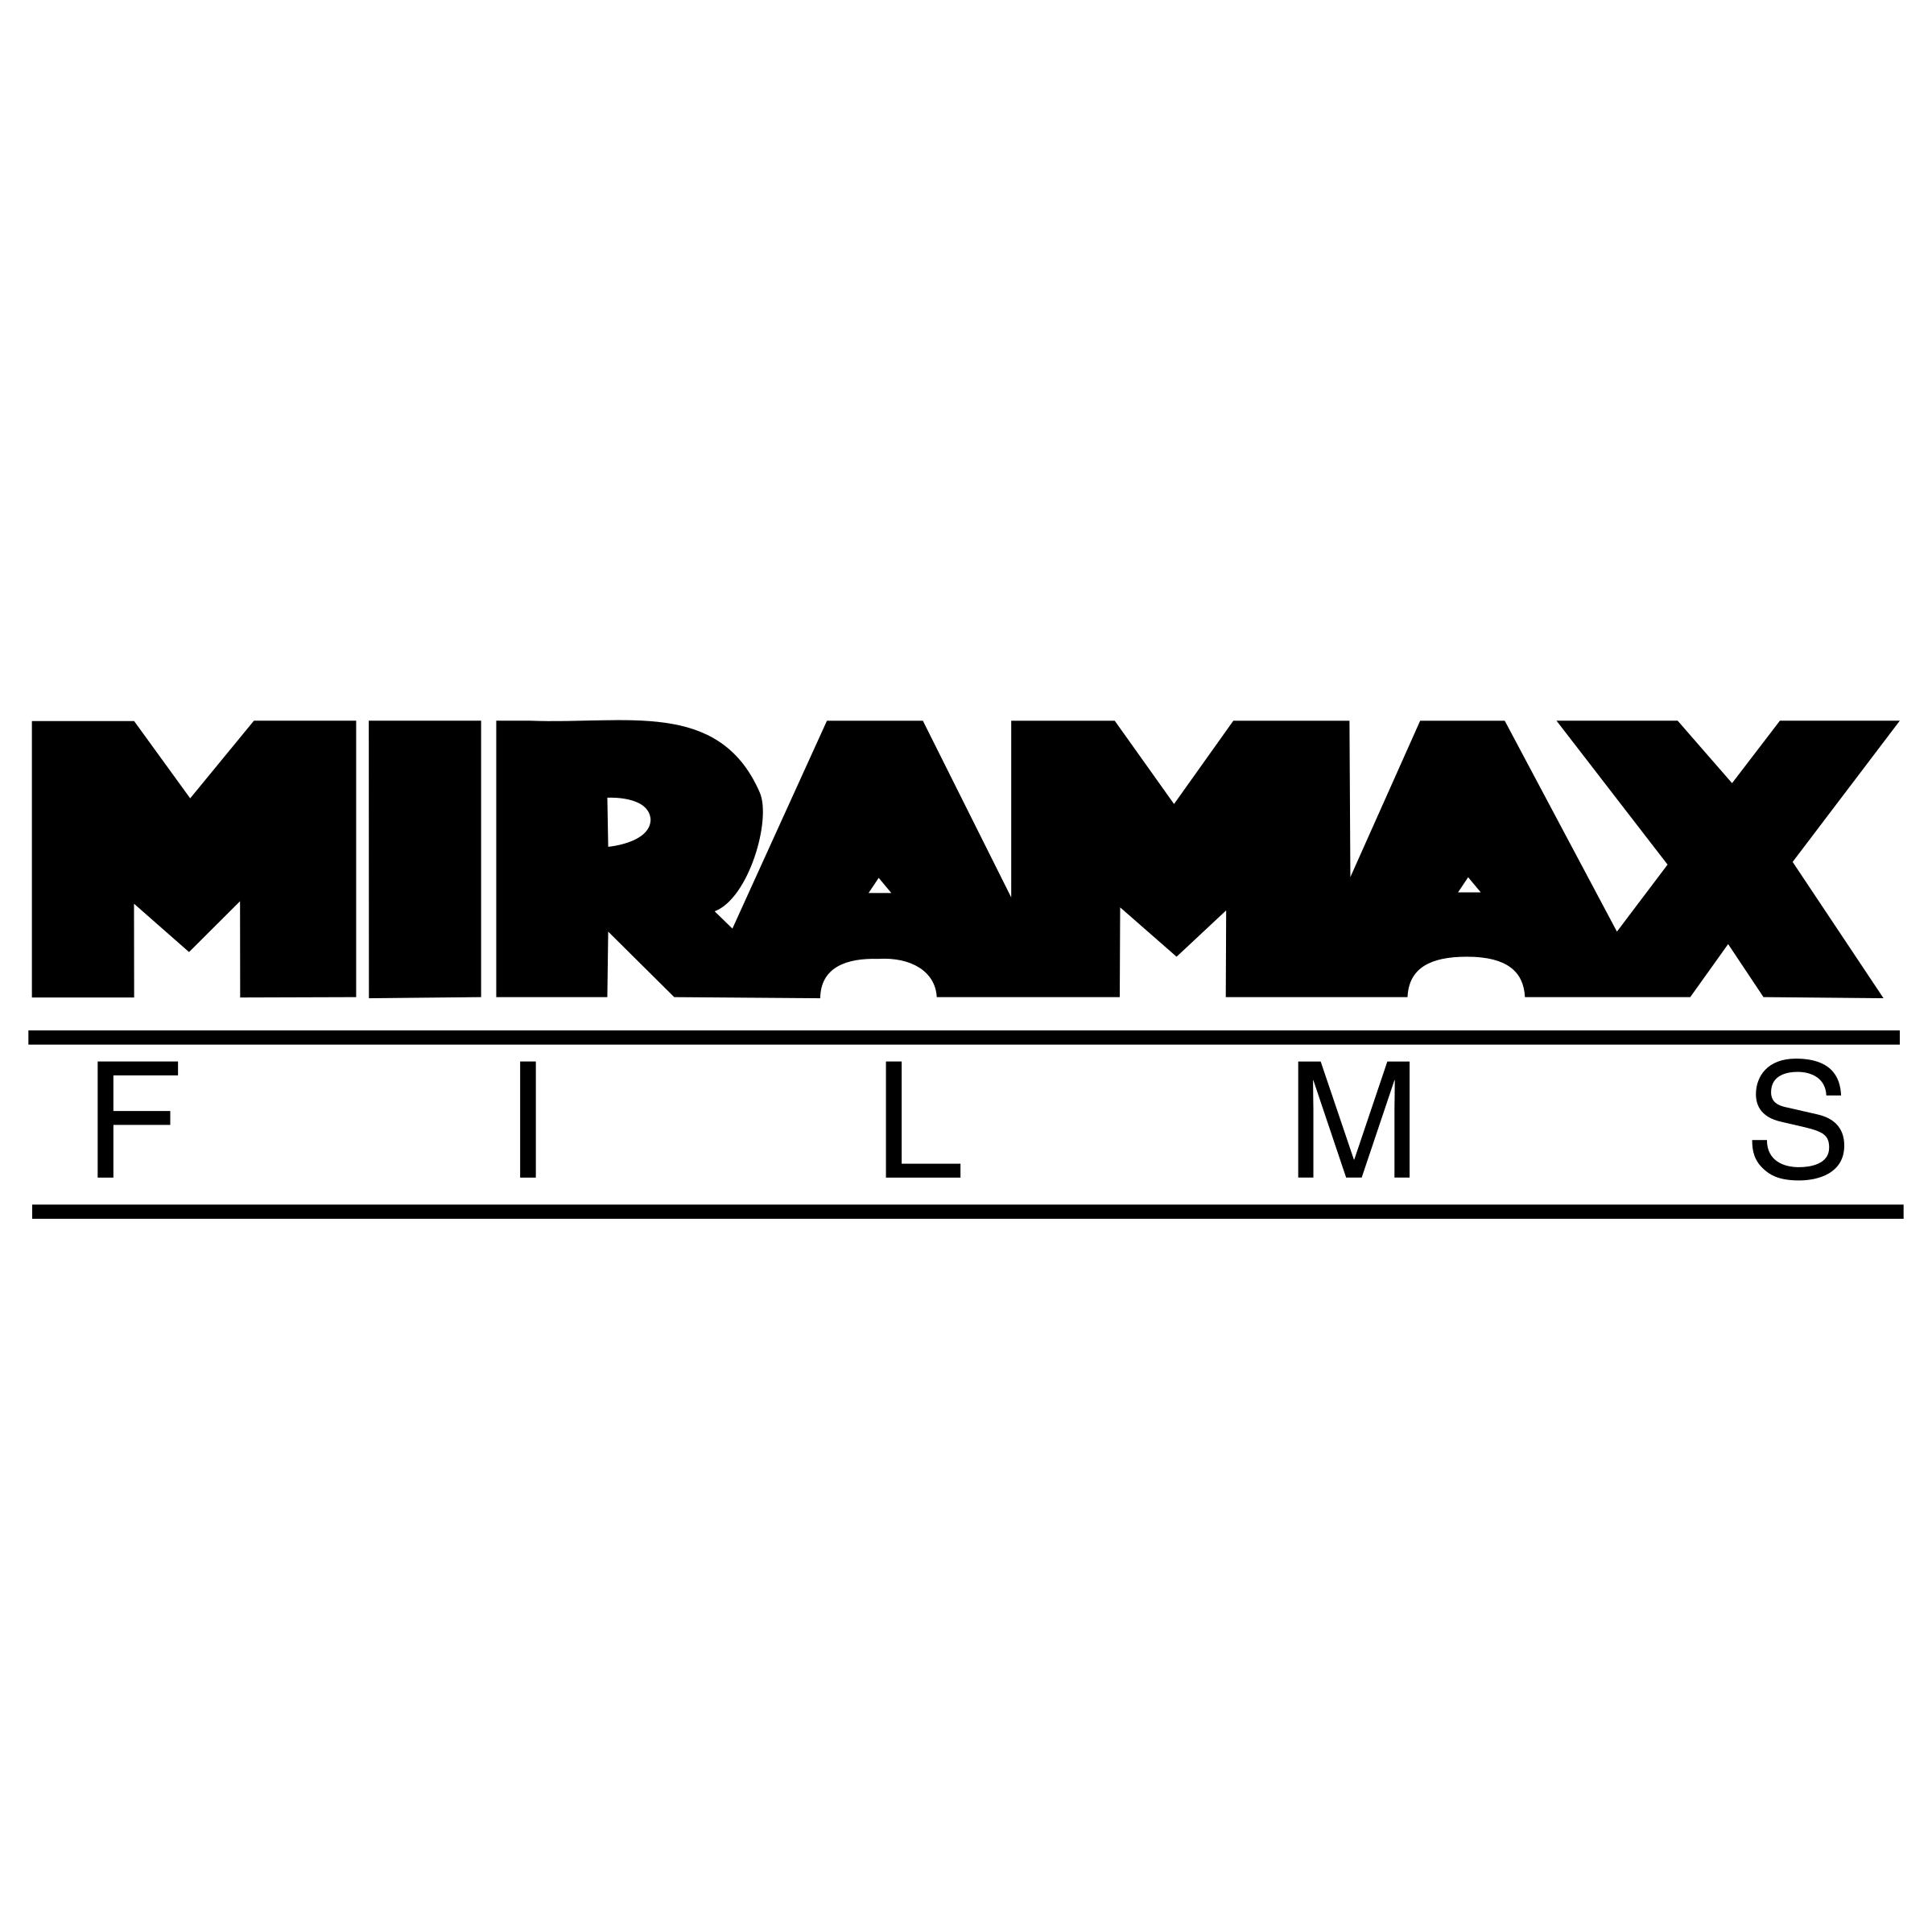 Mirimax Logo - Miramax Films Logo PNG Transparent & SVG Vector - Freebie Supply